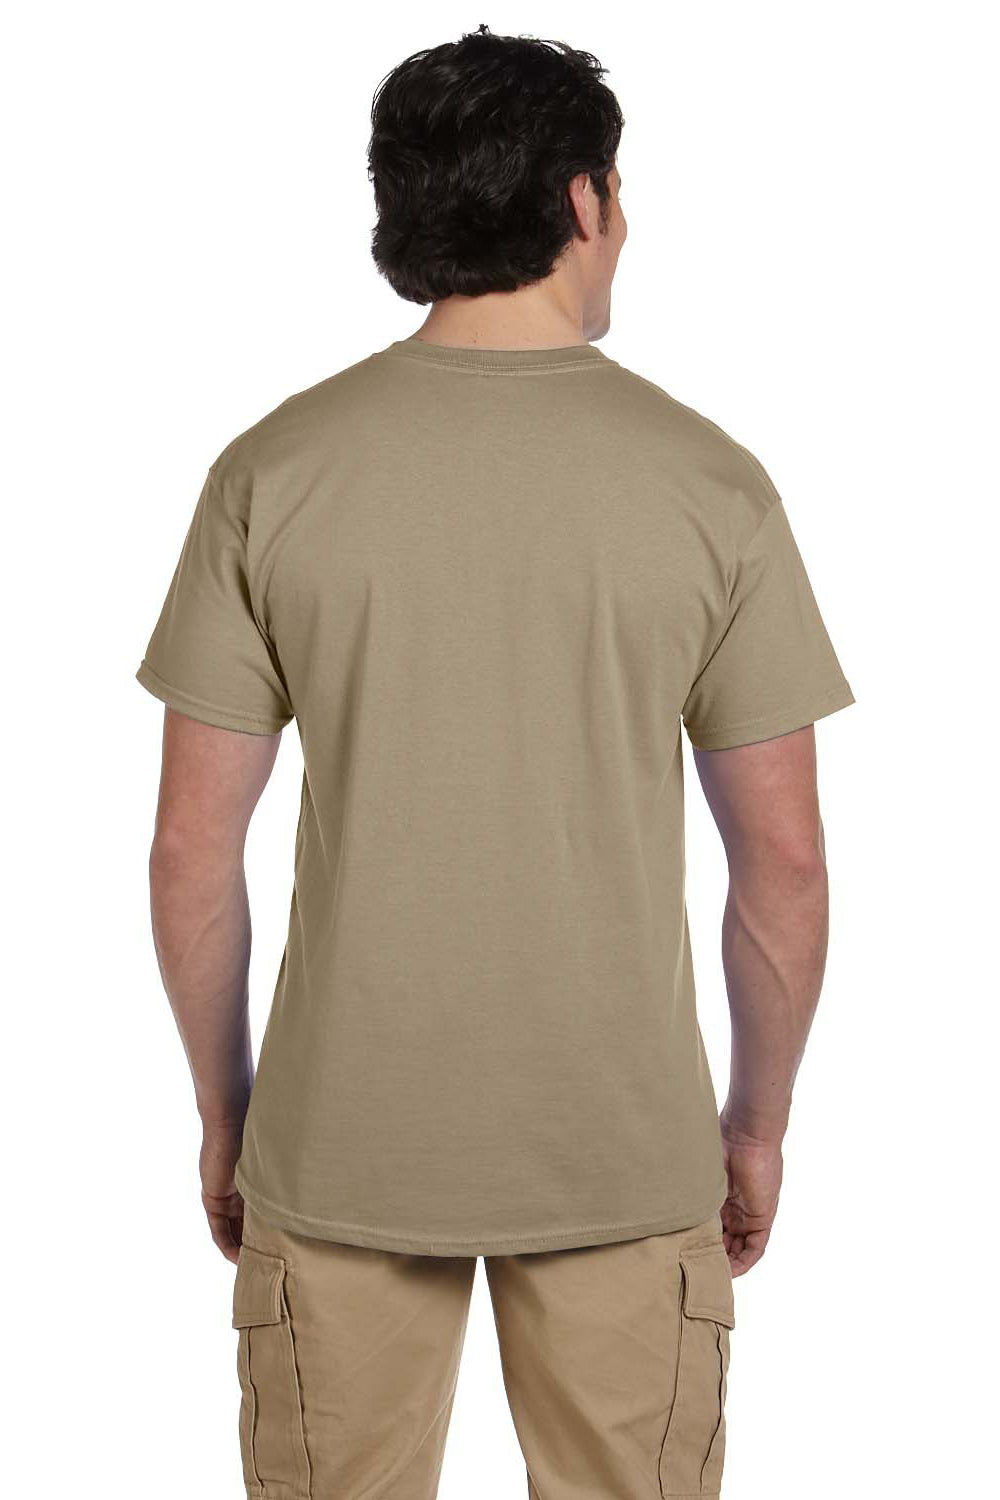 Fruit Of The Loom 3931 Mens HD Jersey Short Sleeve Crewneck T-Shirt Khaki Brown Back